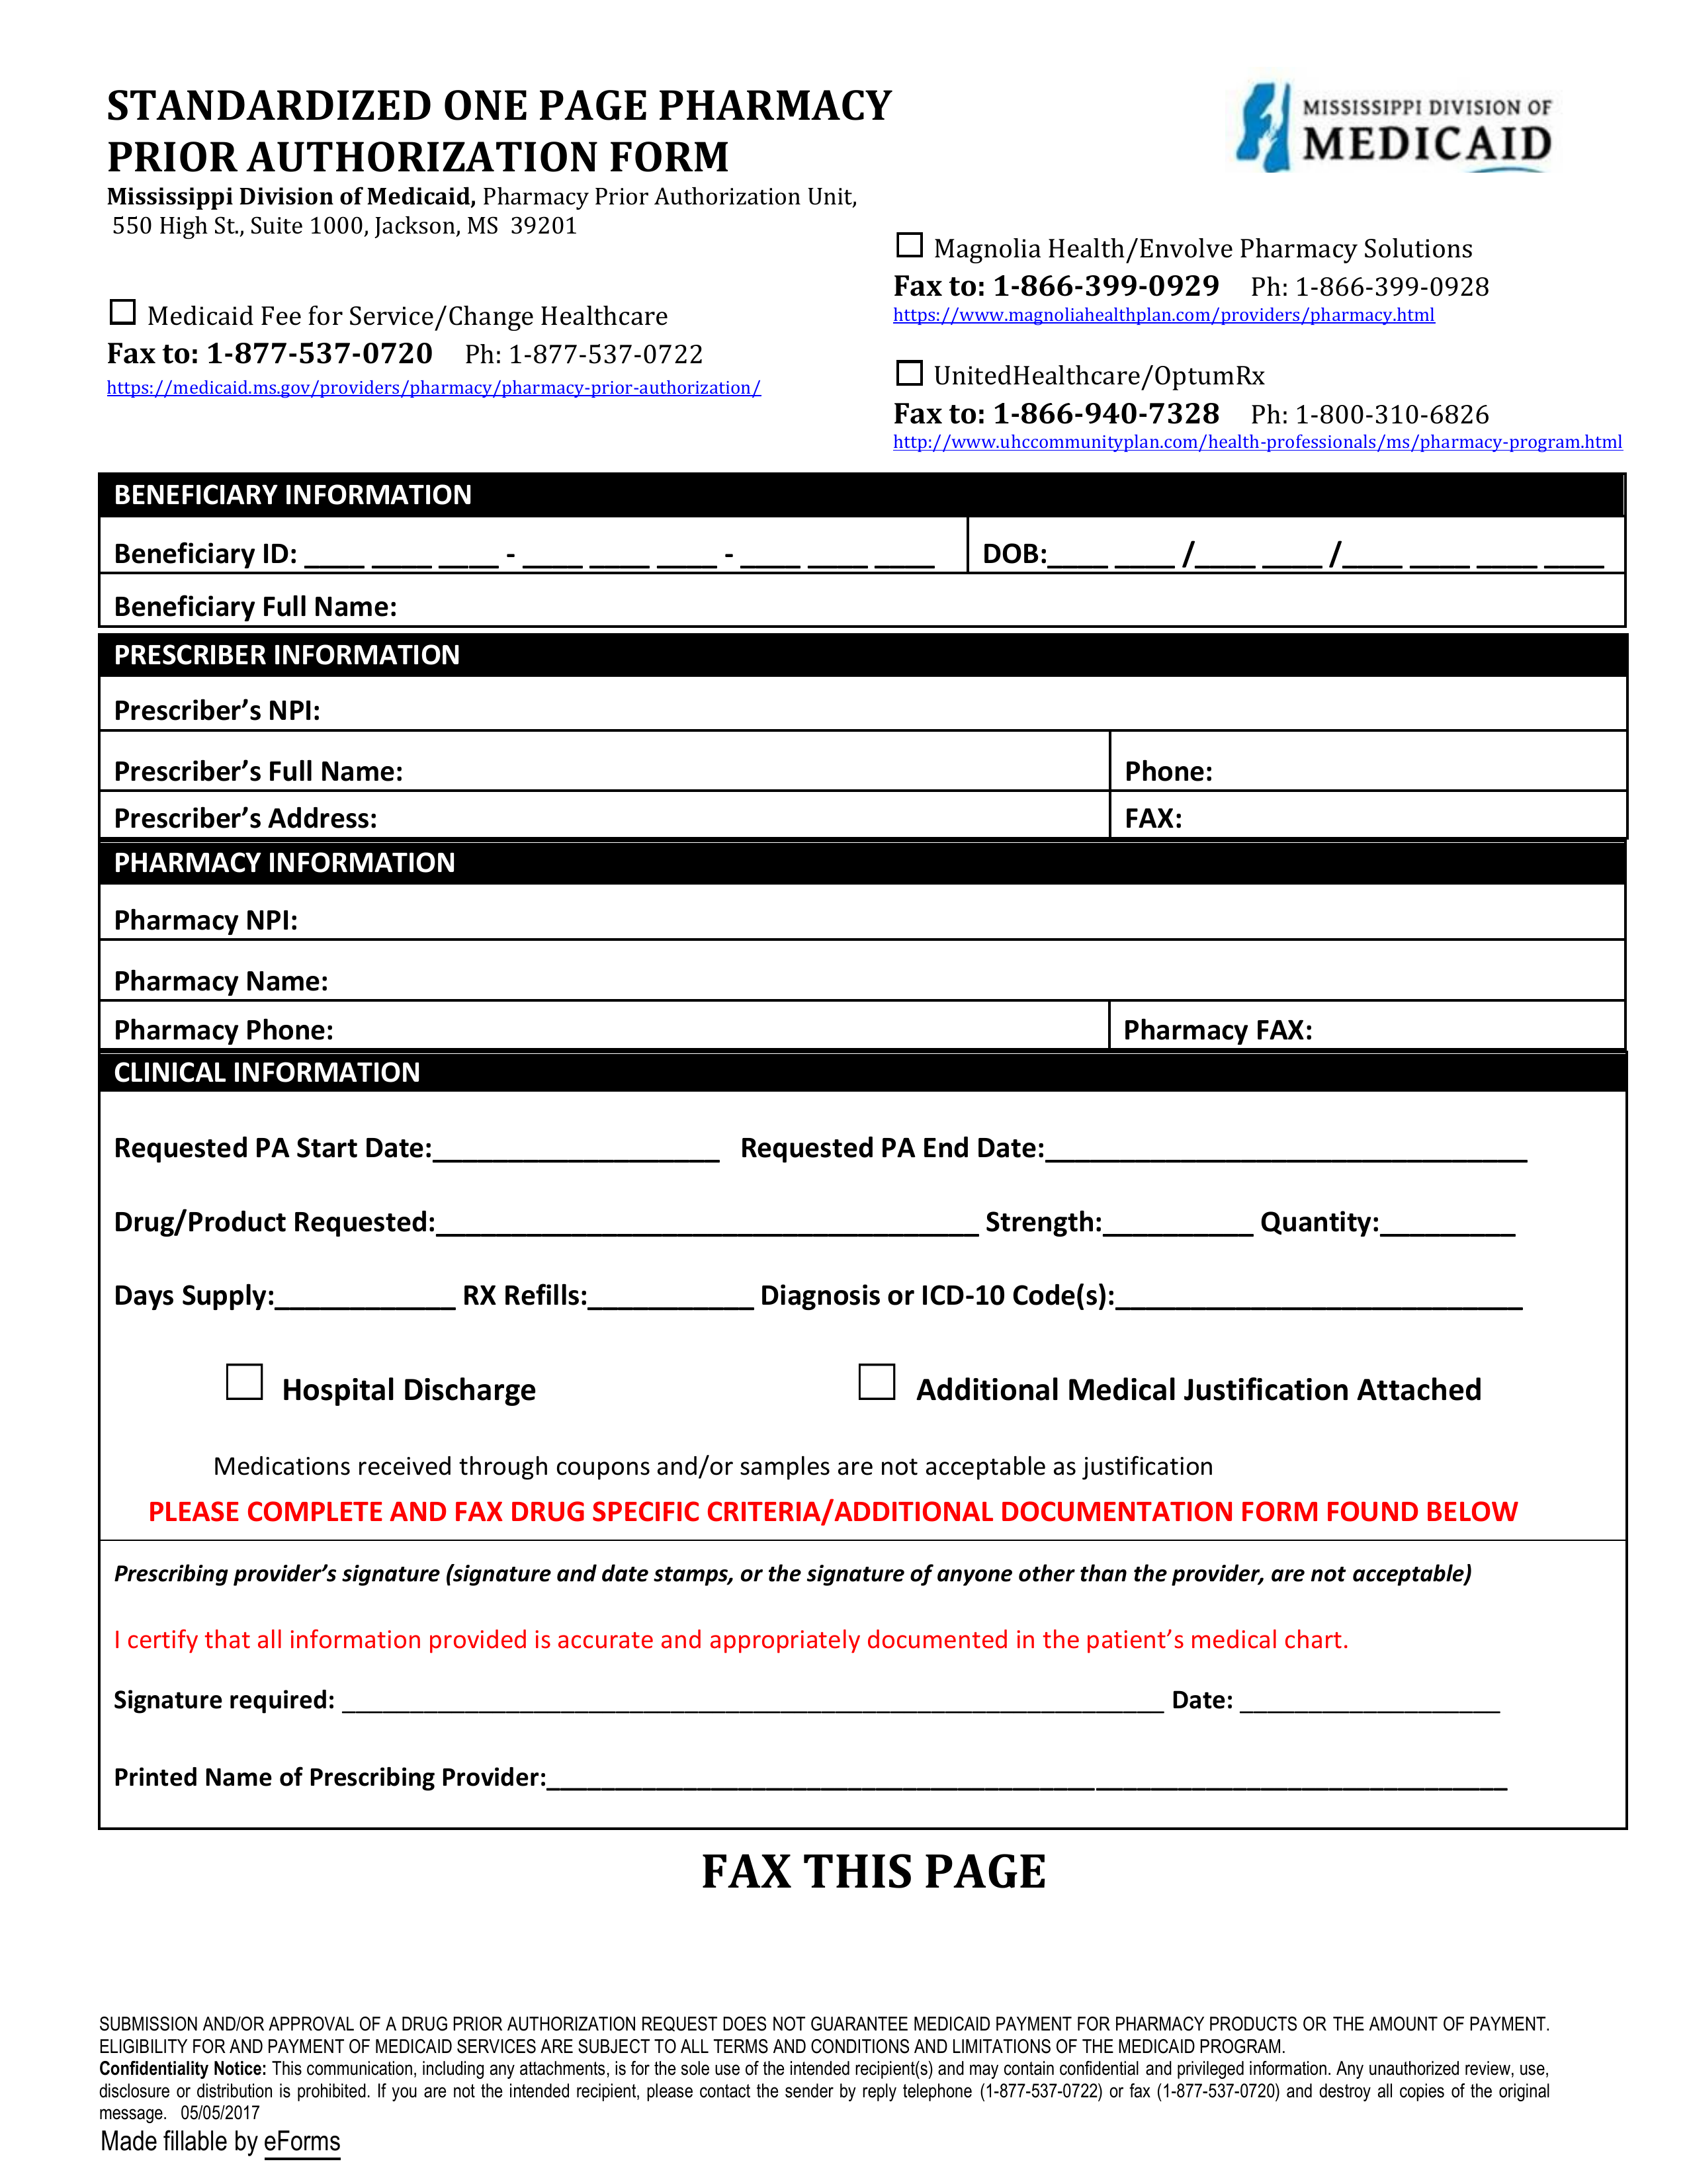 Amerigroup Prior Authorization Form 2023 4651